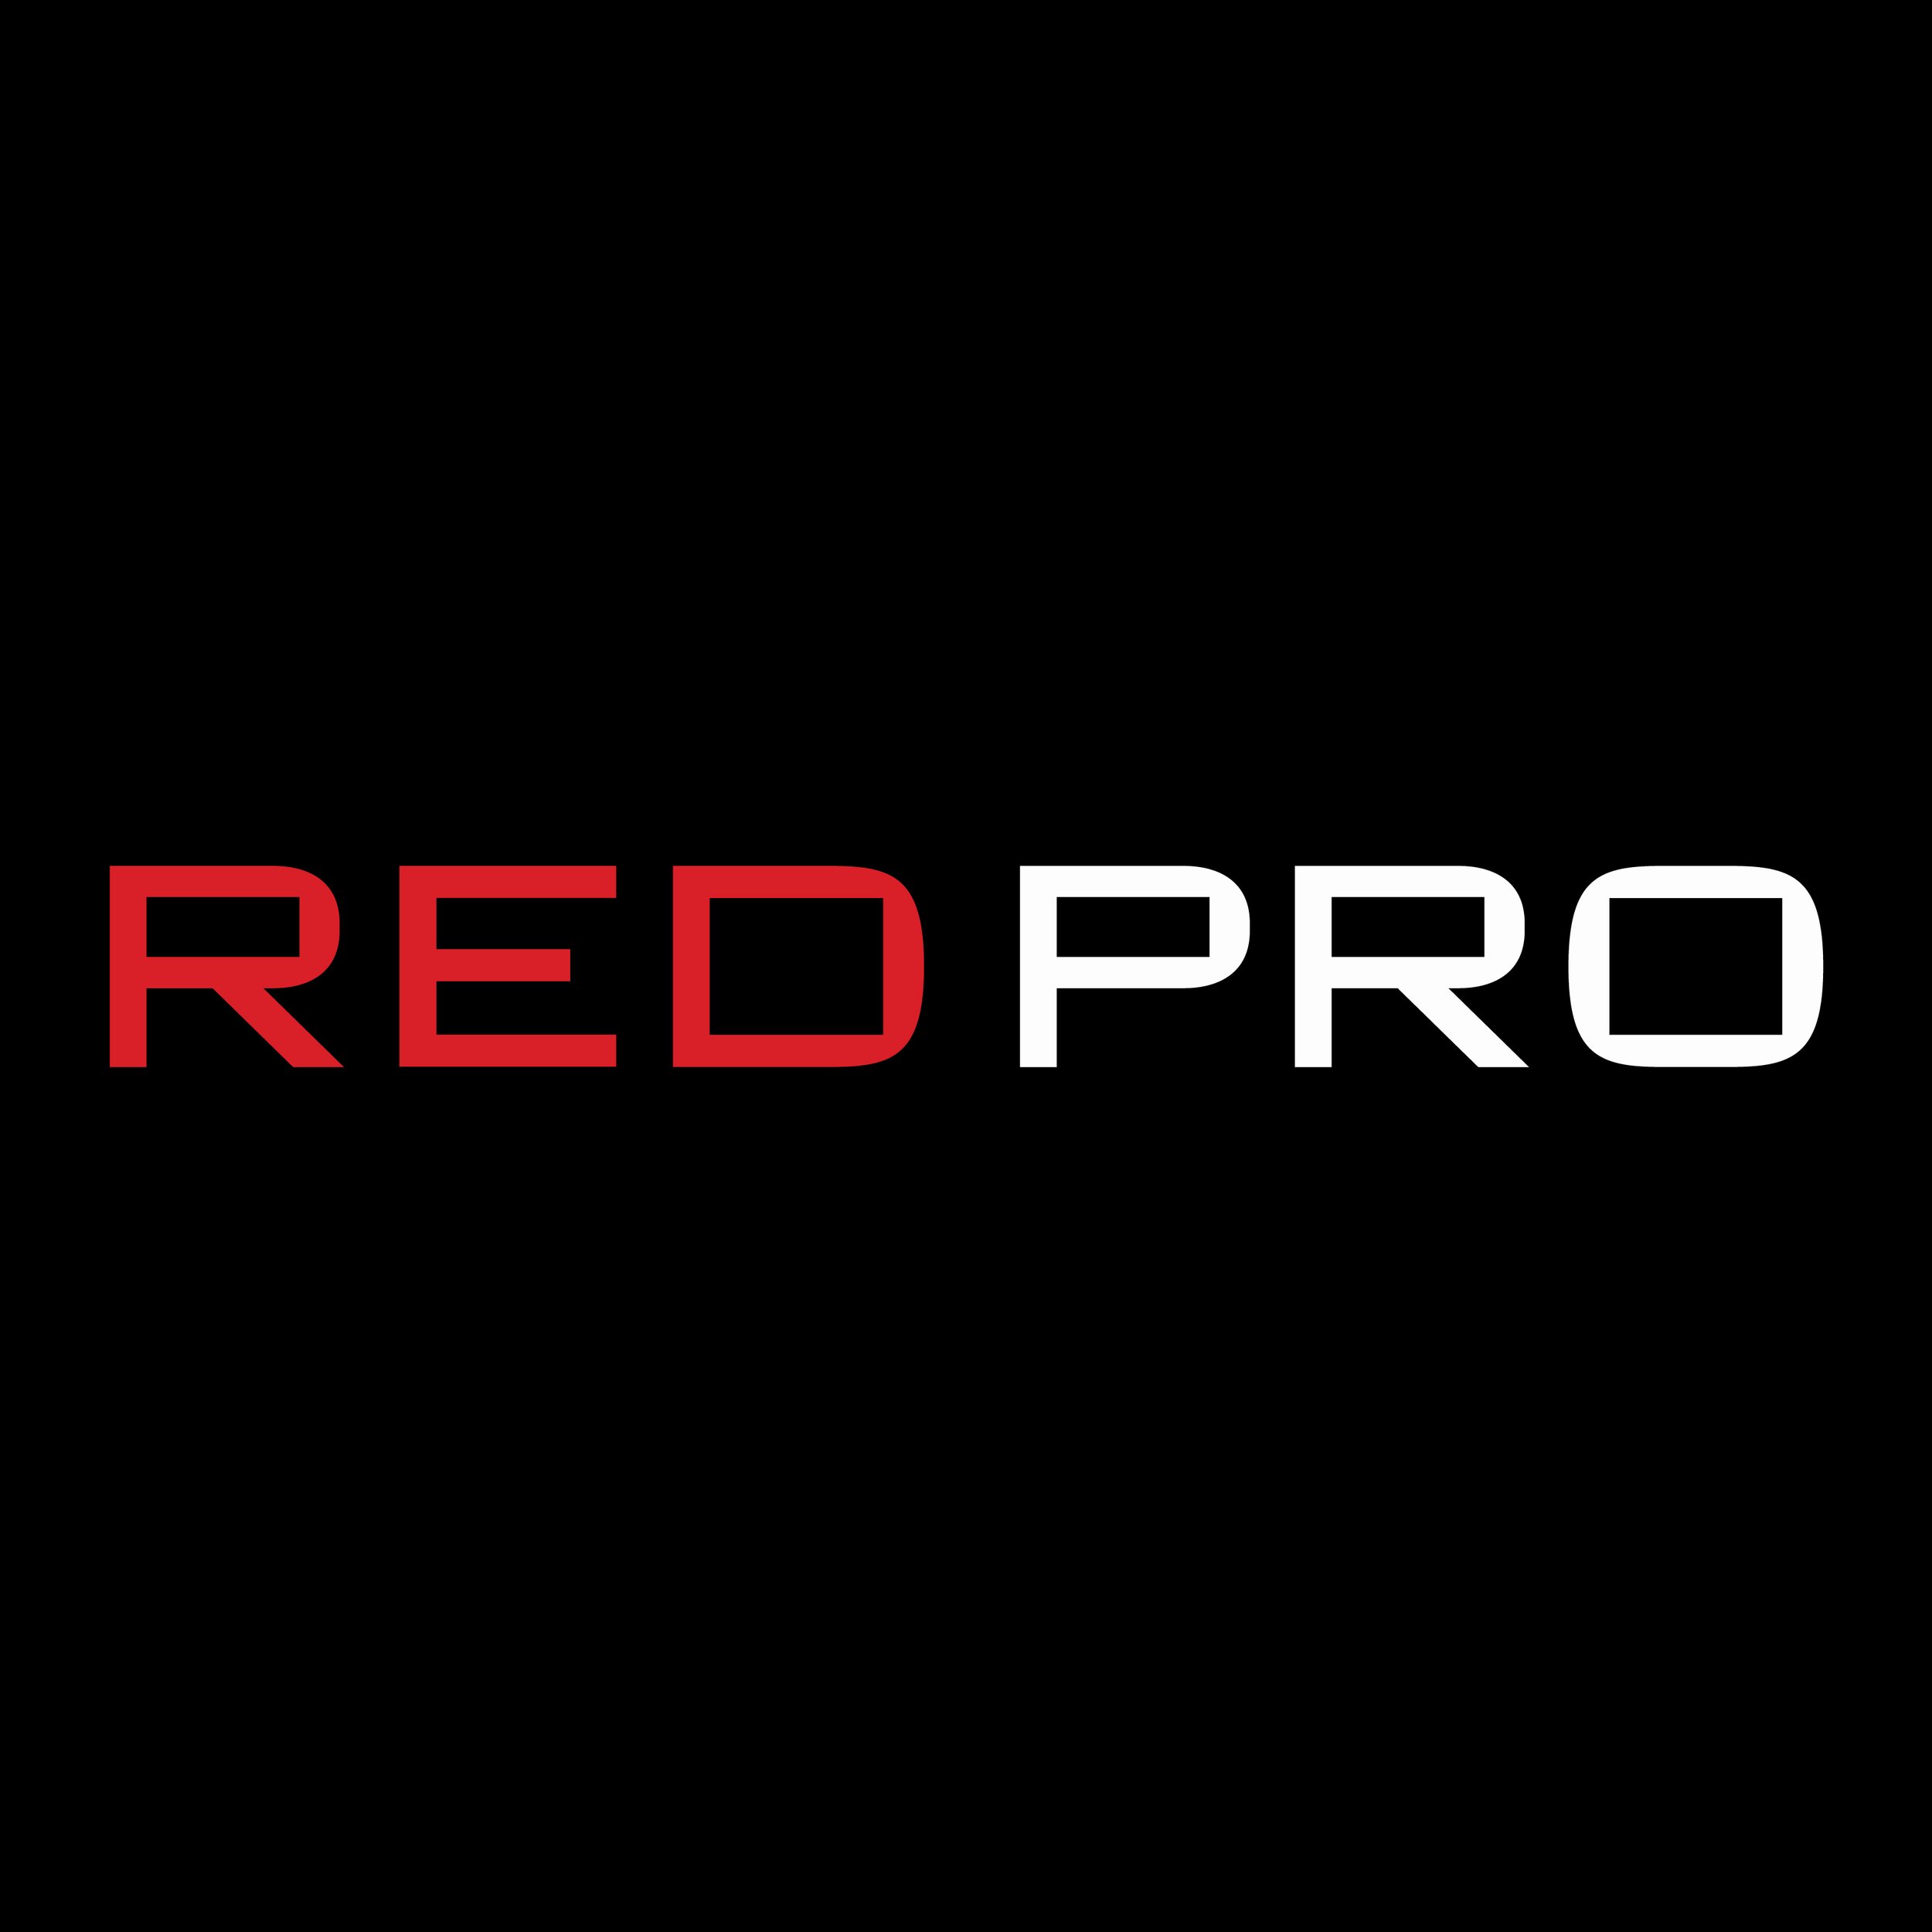 Red-Pro-01.jpg